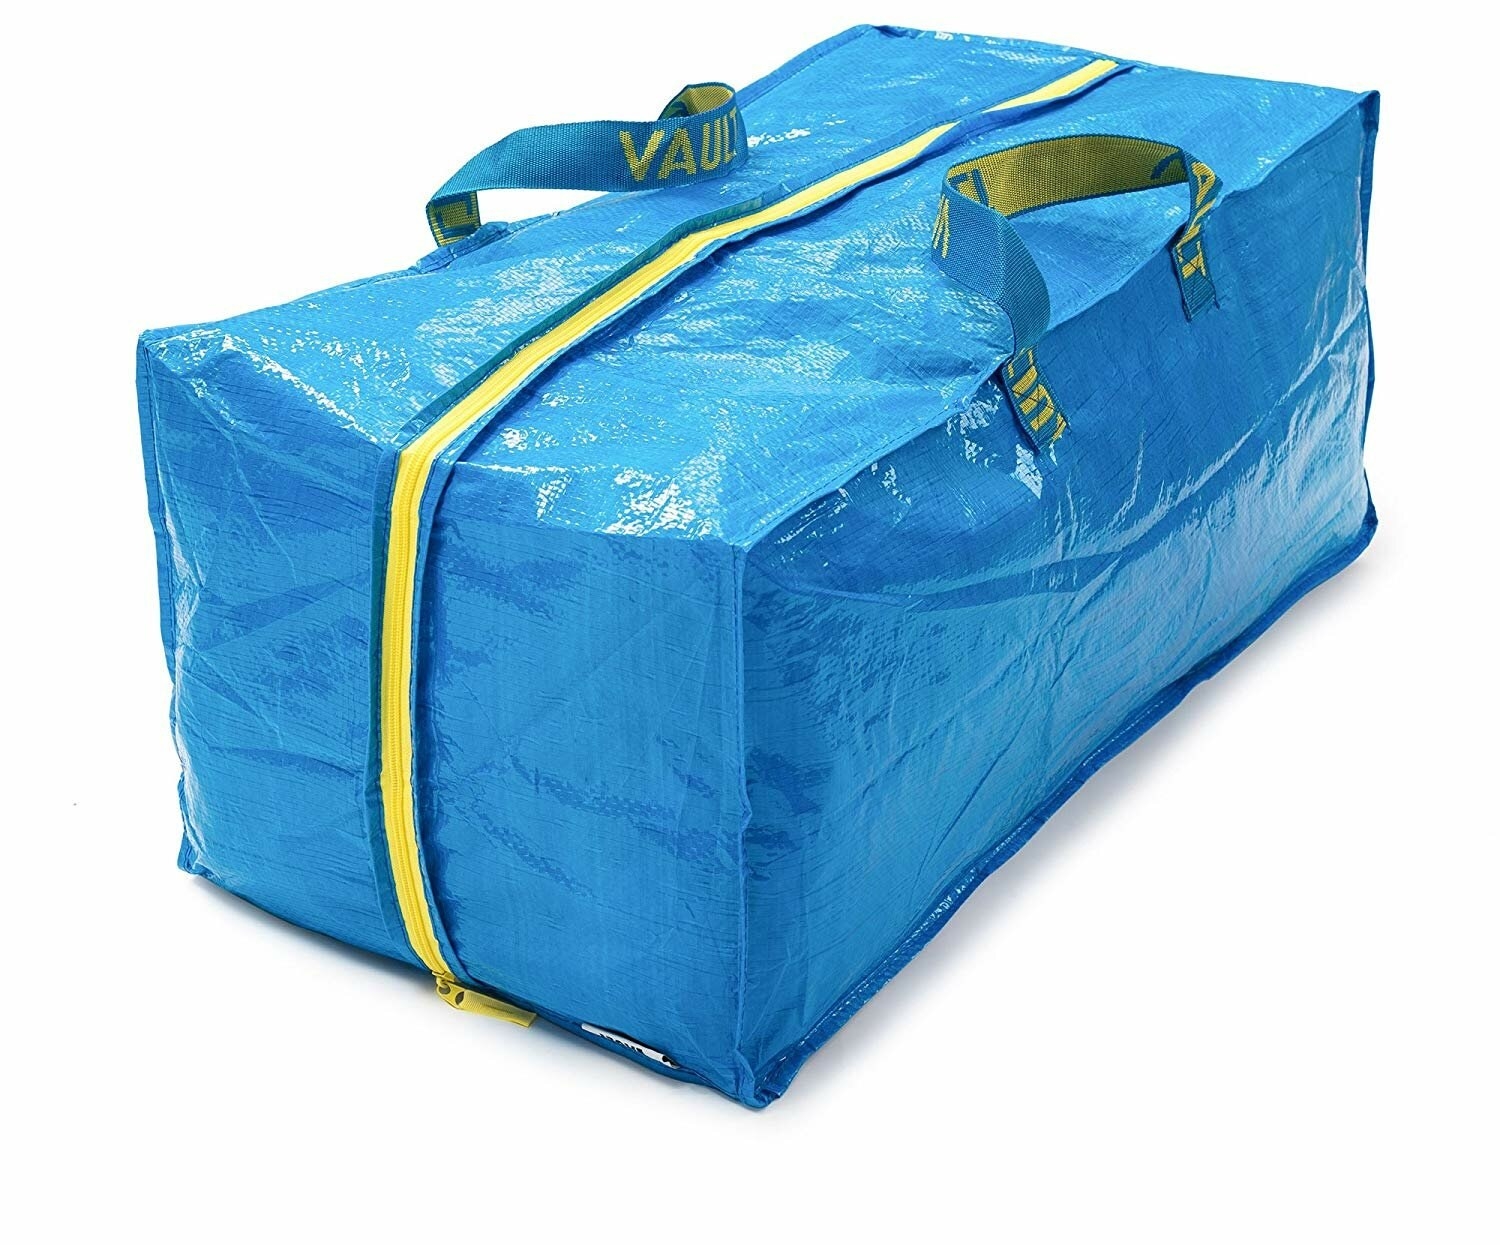 blue rectangular bag that zips